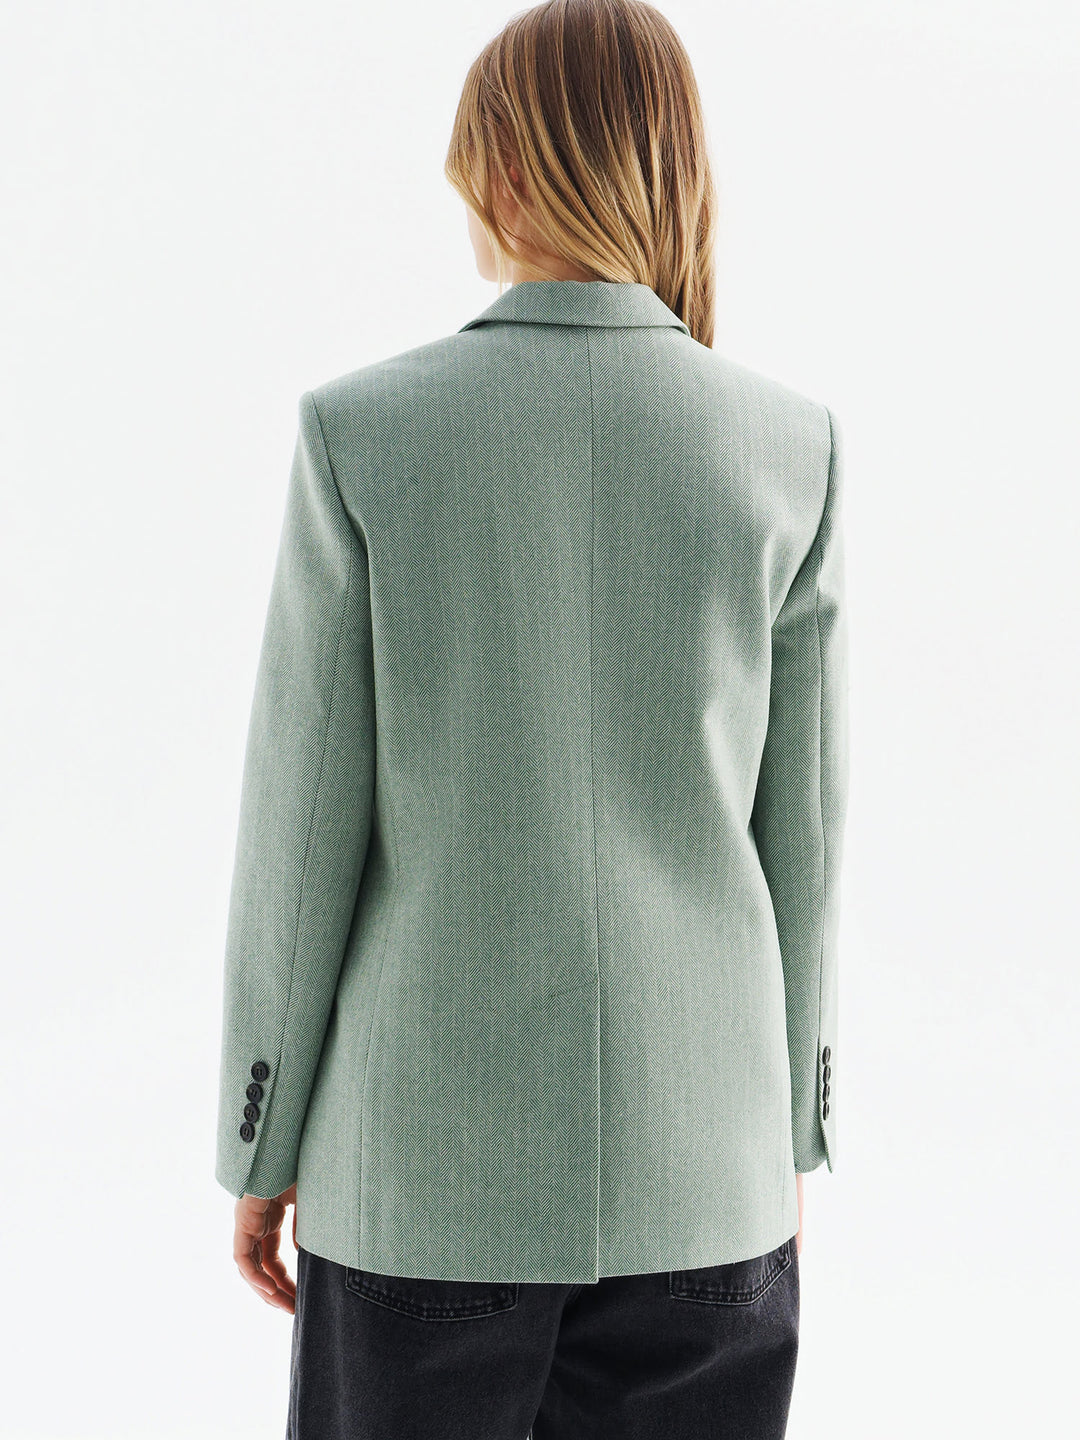 Women - Blazer - Straight silhouette- Side flap pockets- Button closure - Wool - Green